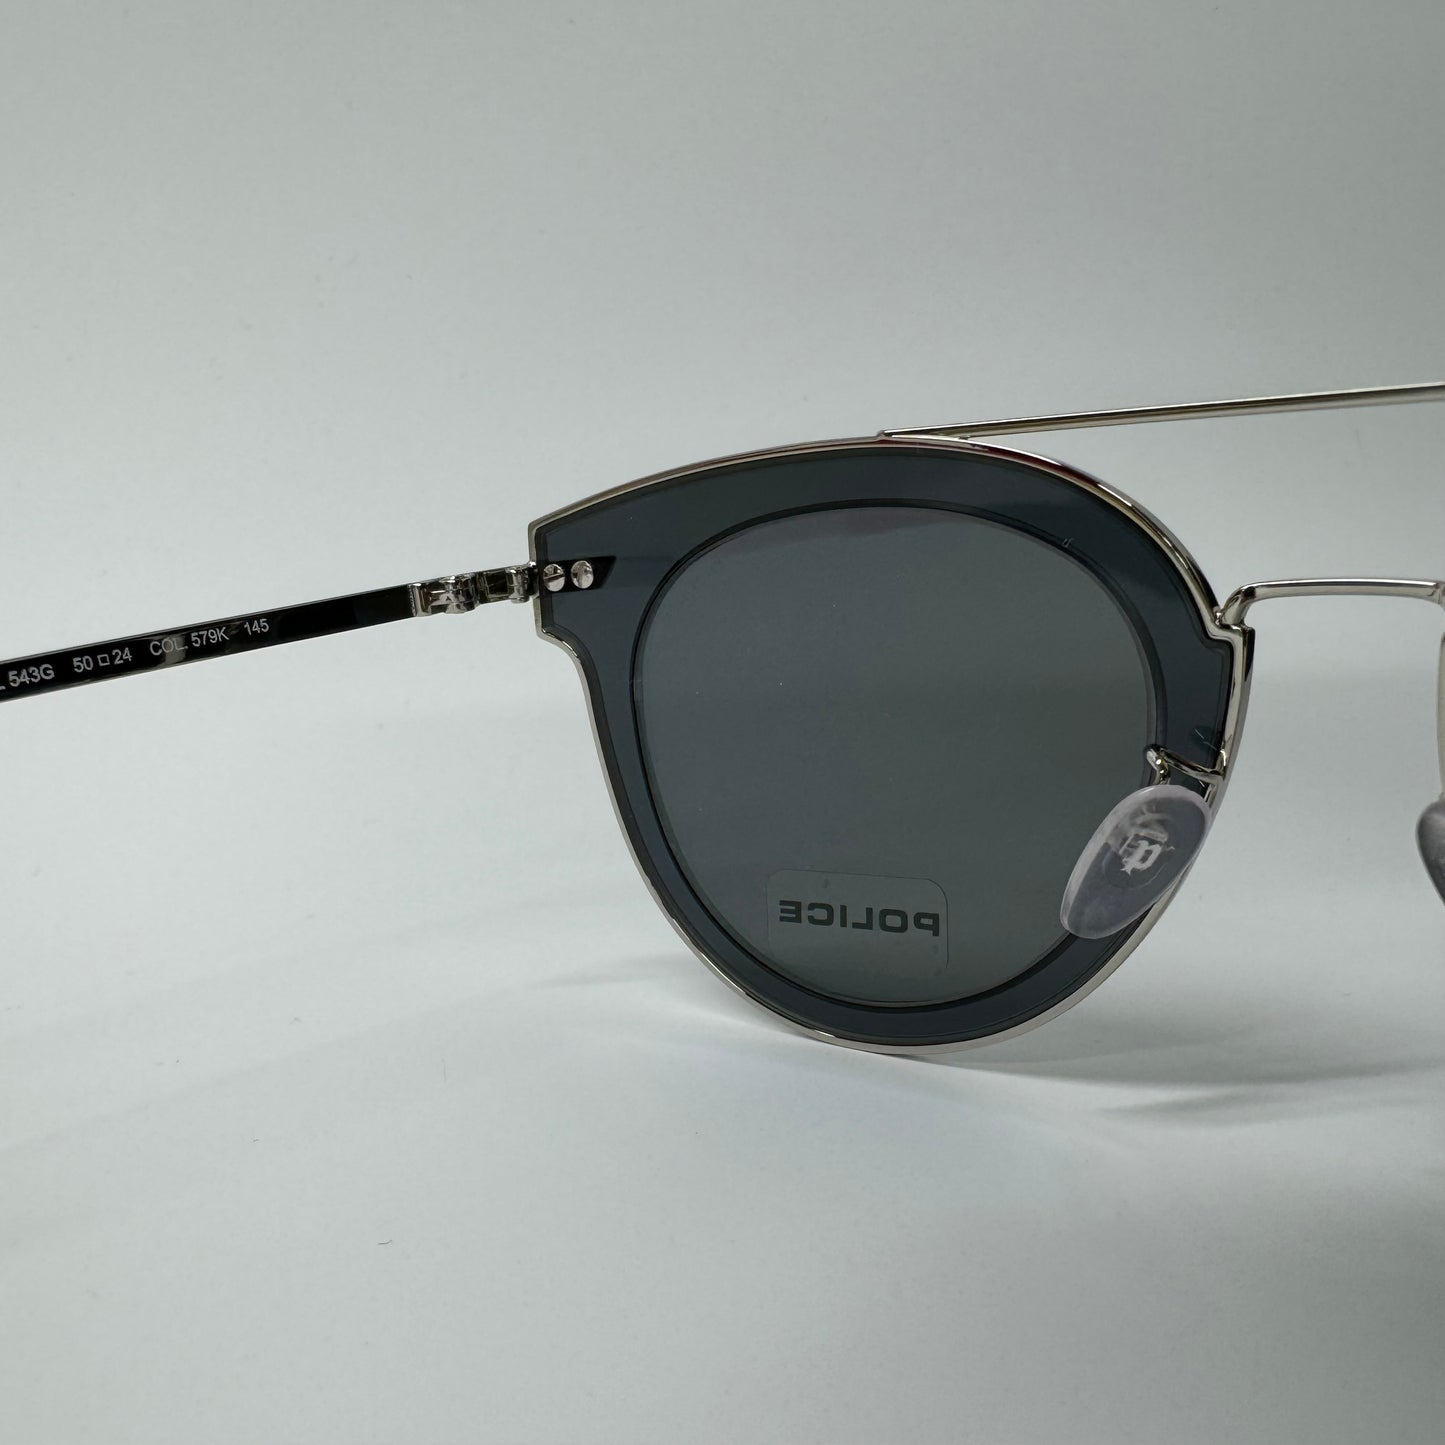 Mens Police Silver & Black Round Mirrored Designer Sunglasses SPL 543G 579K